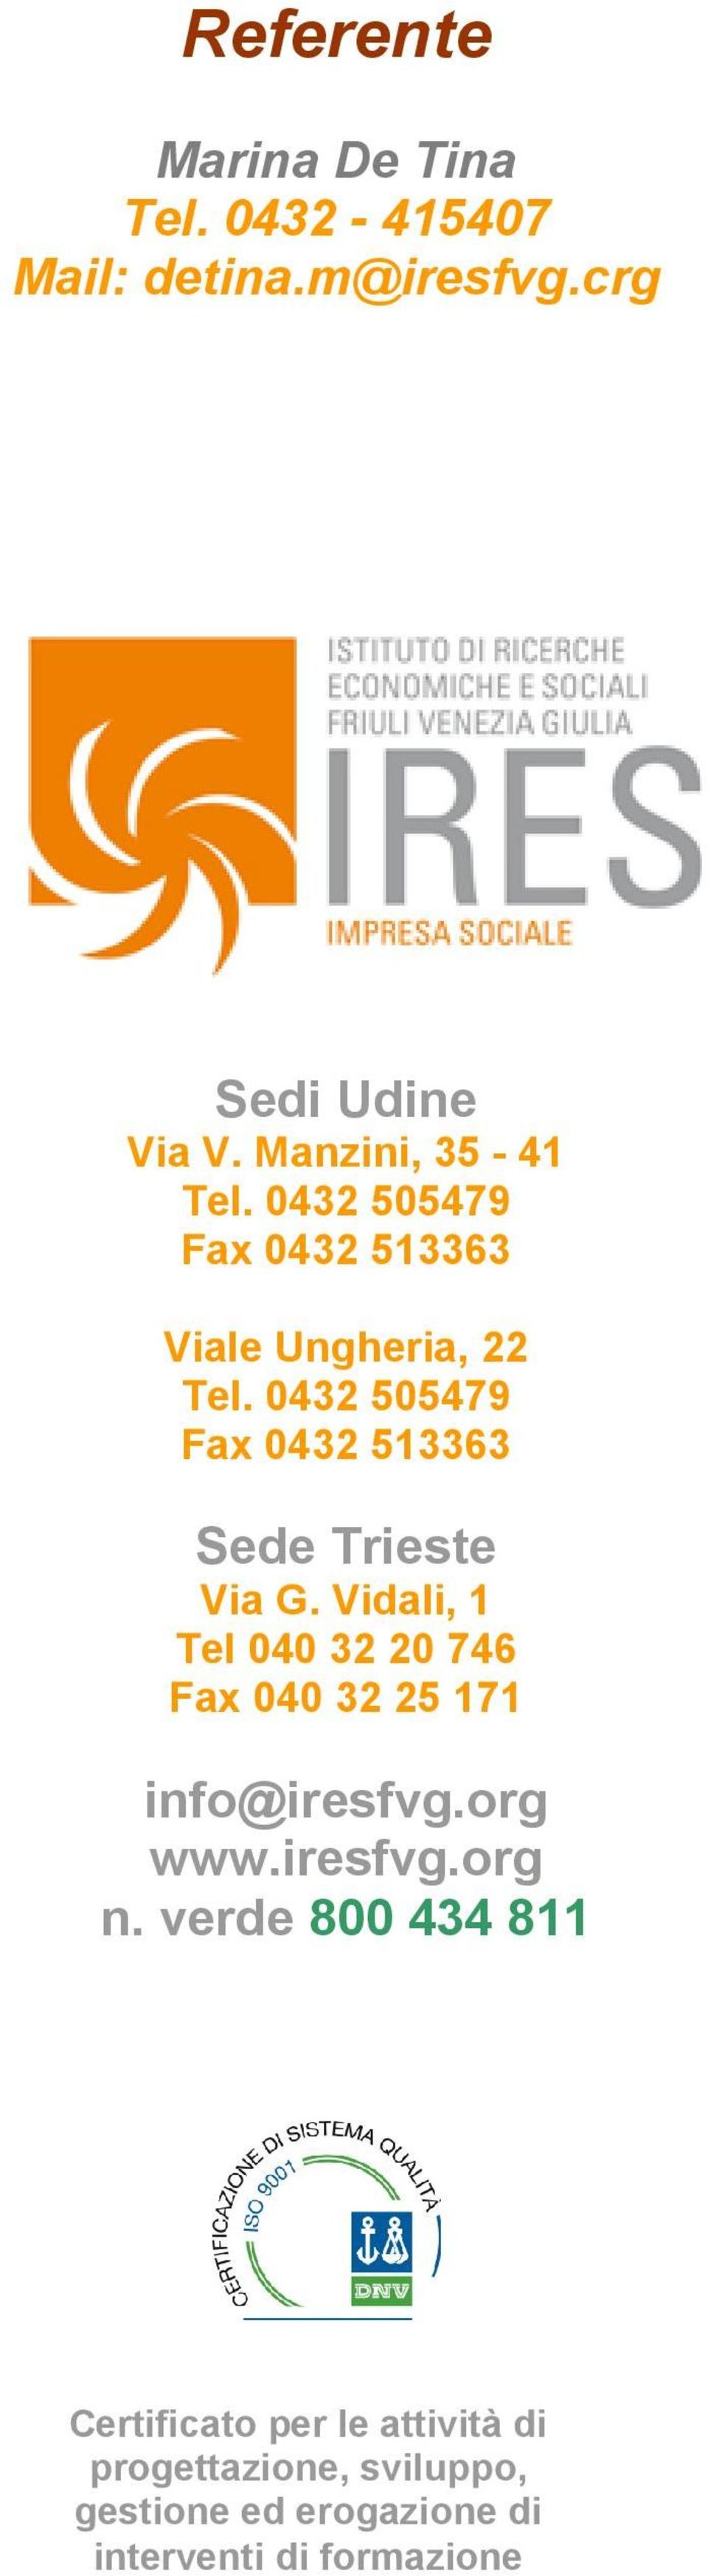 0432 505479 Fax 0432 513363 Sede Trieste Via G.